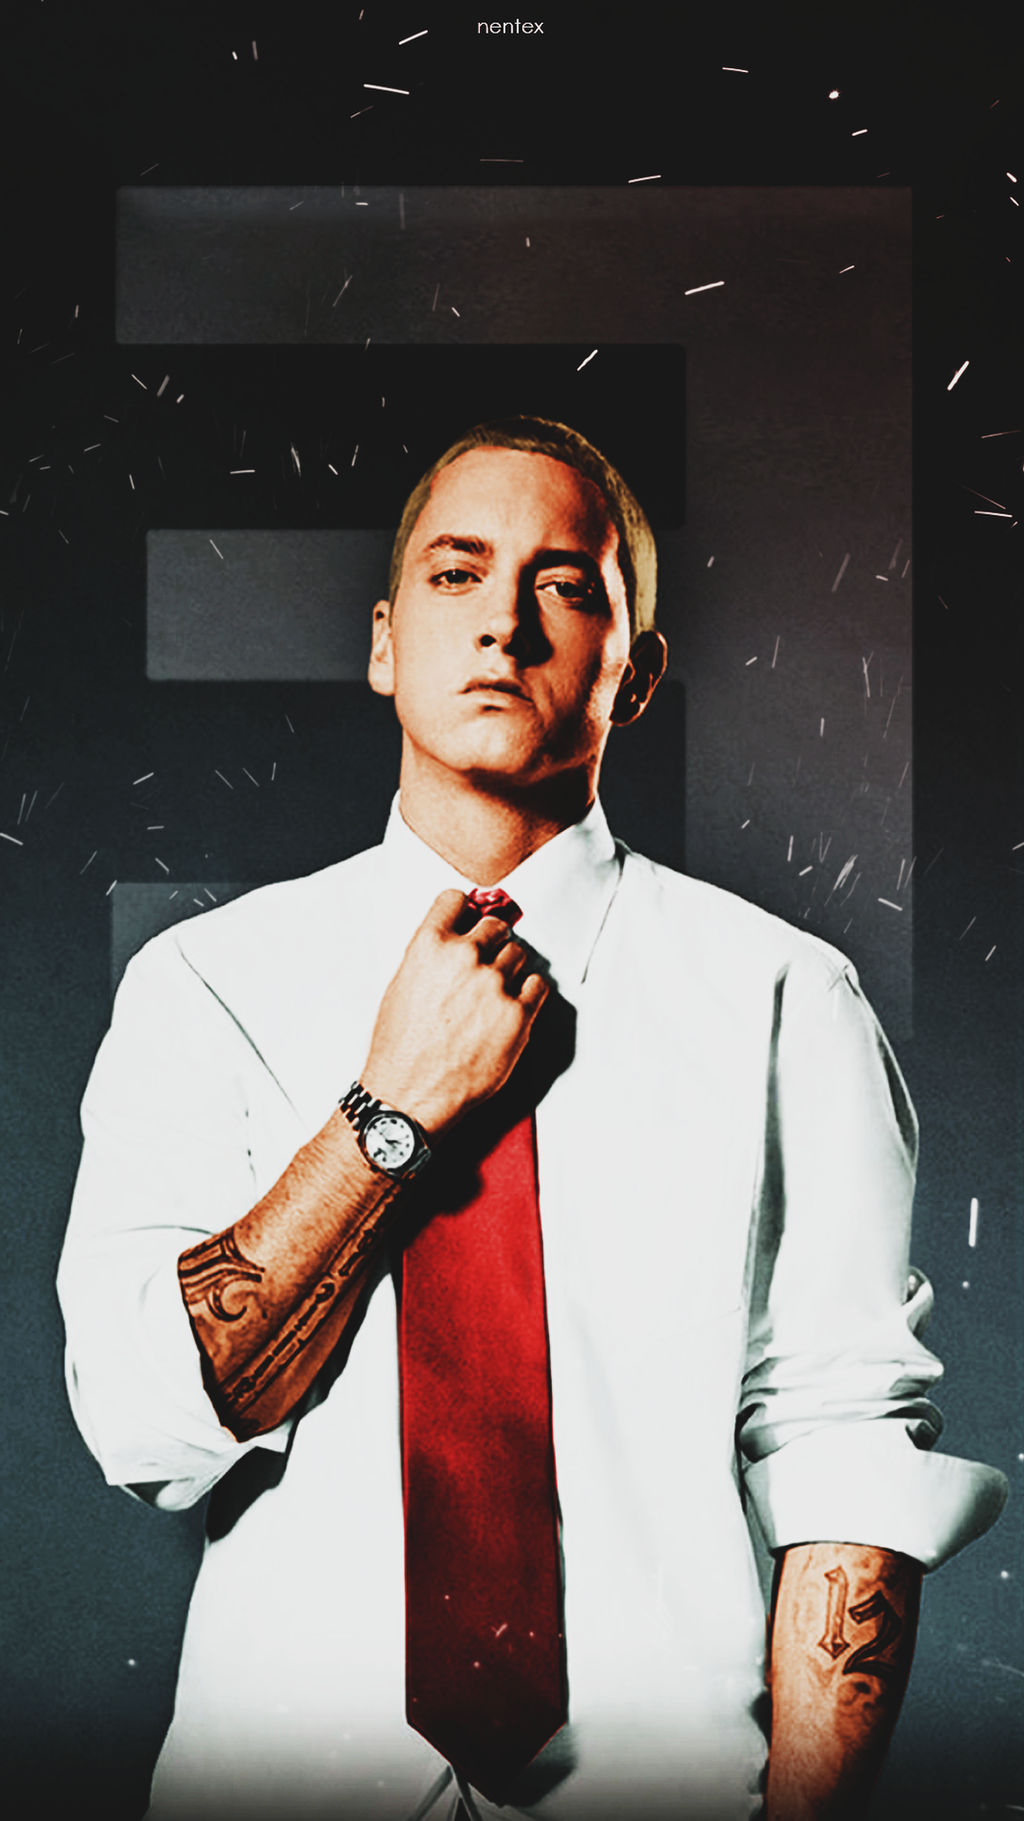 Eminem Wallpaper - NawPic